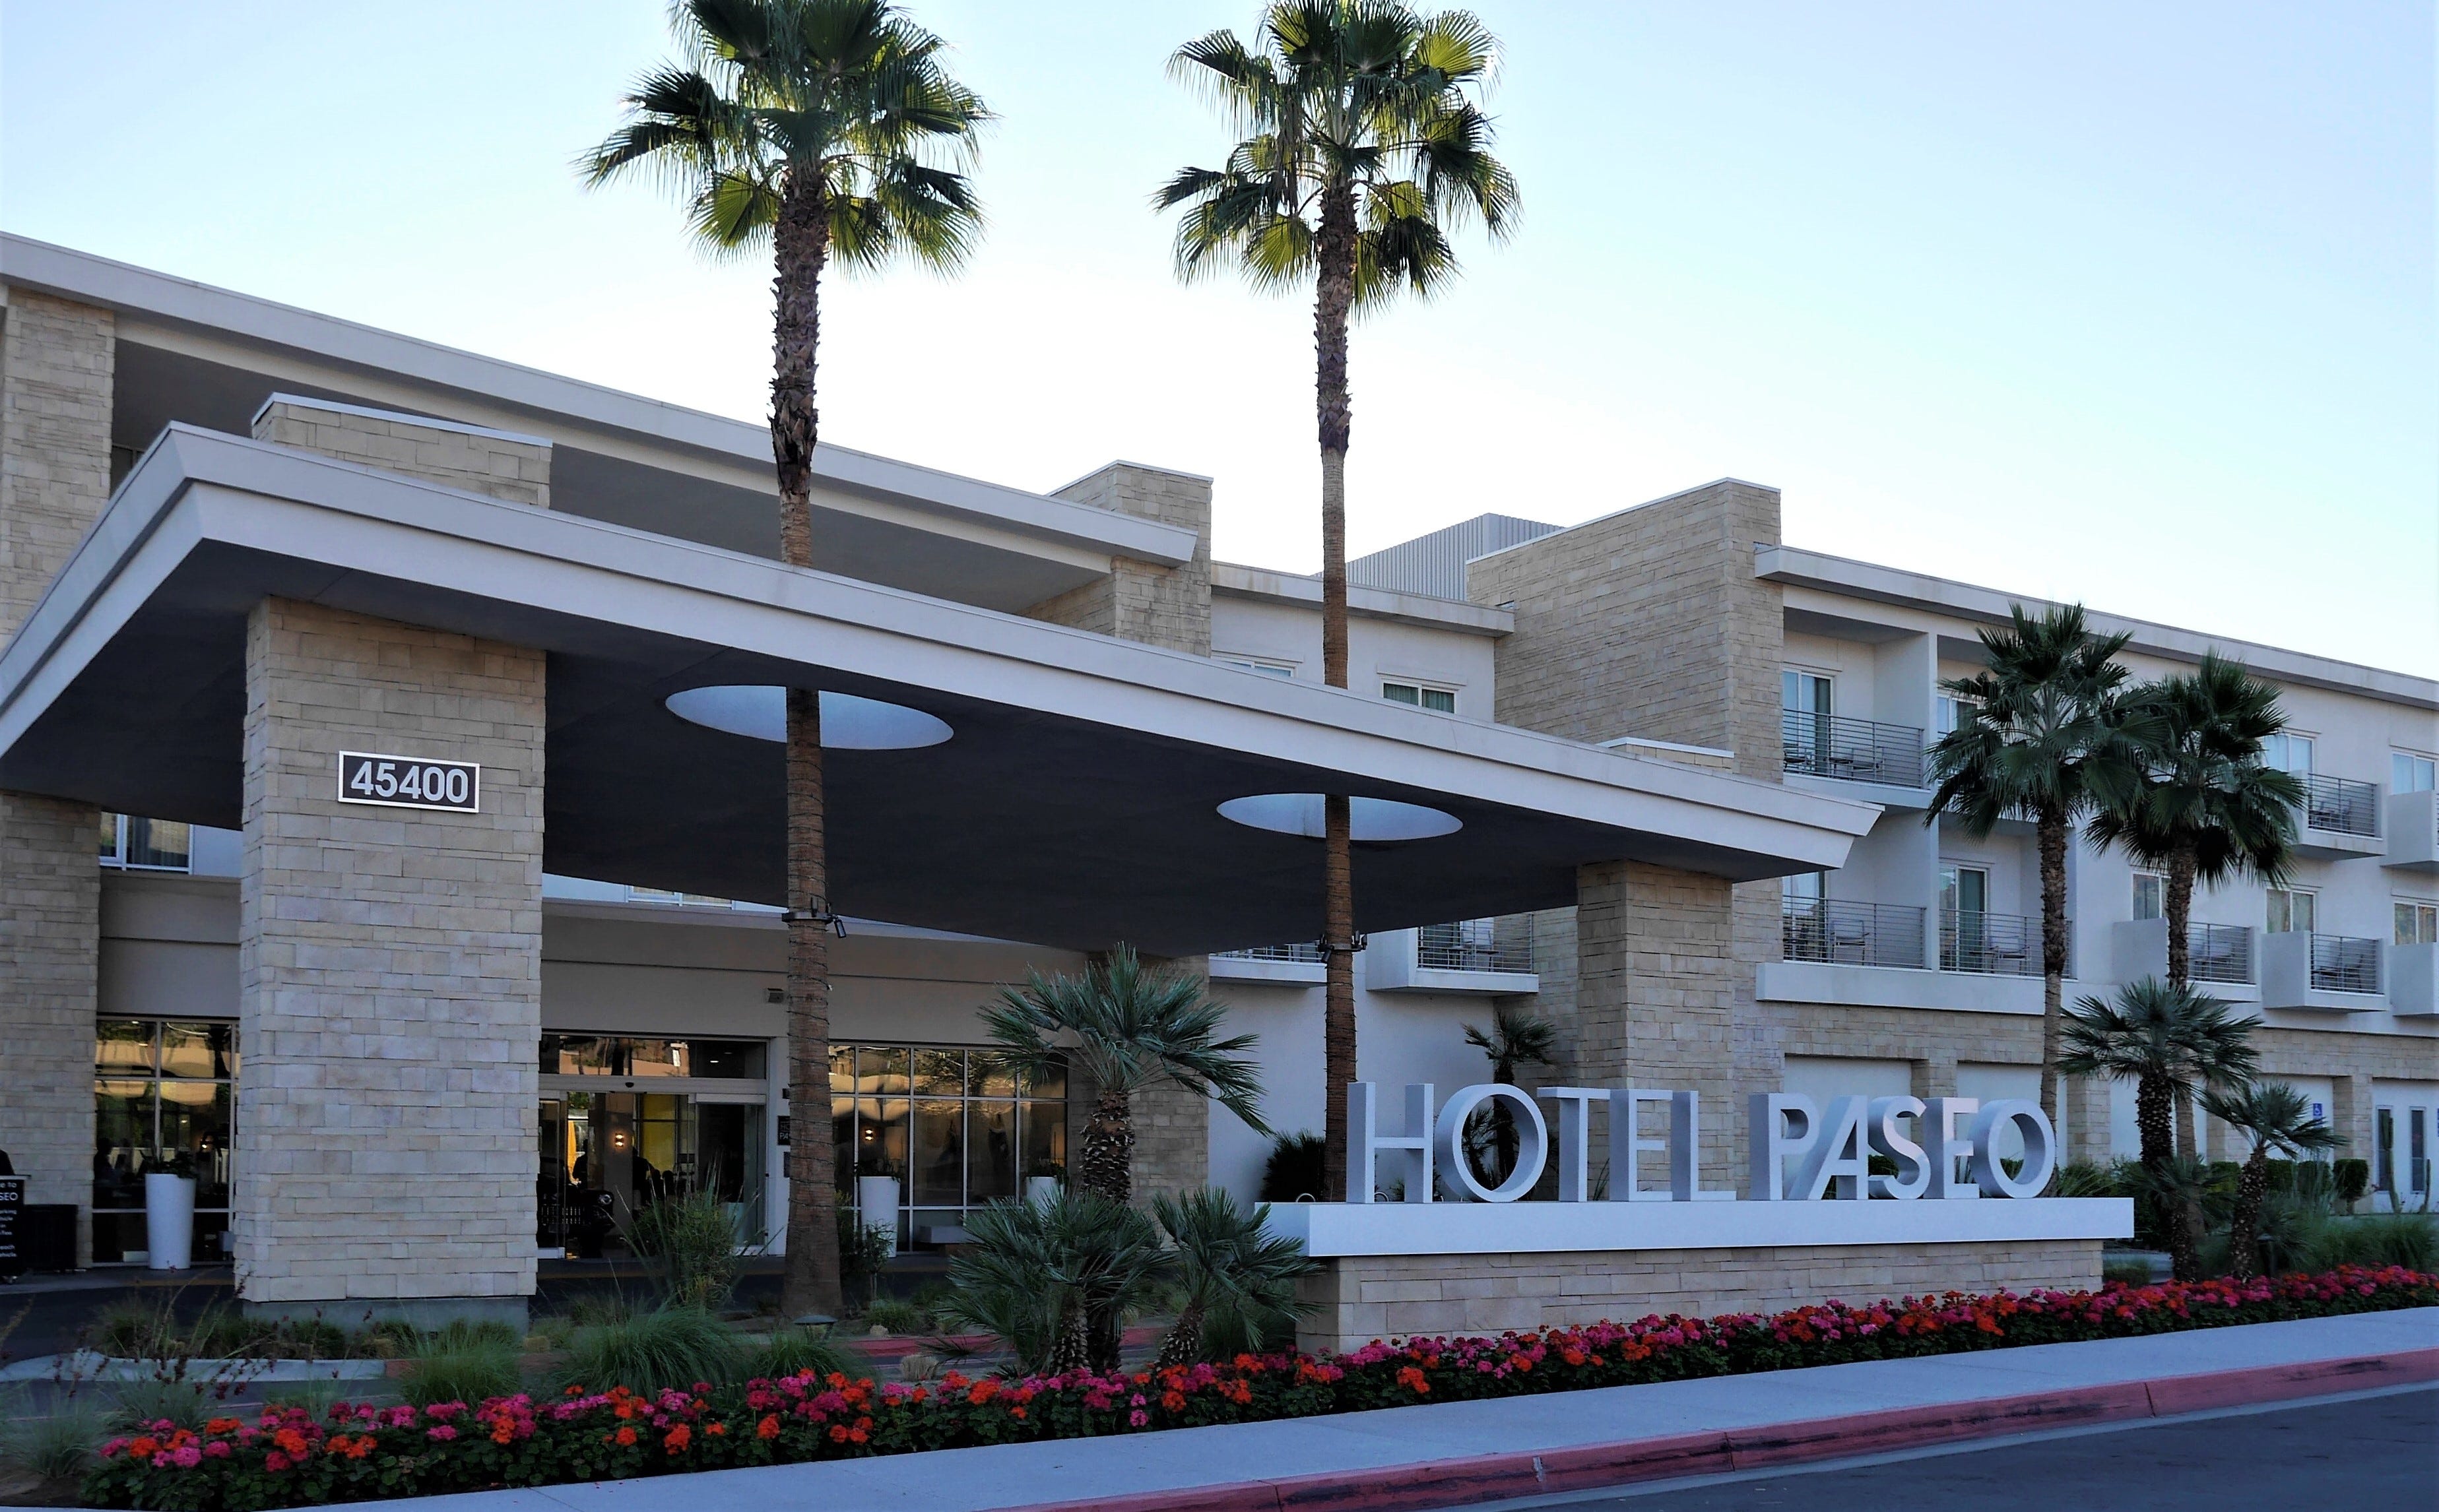 hotel paseo palm desert jobs